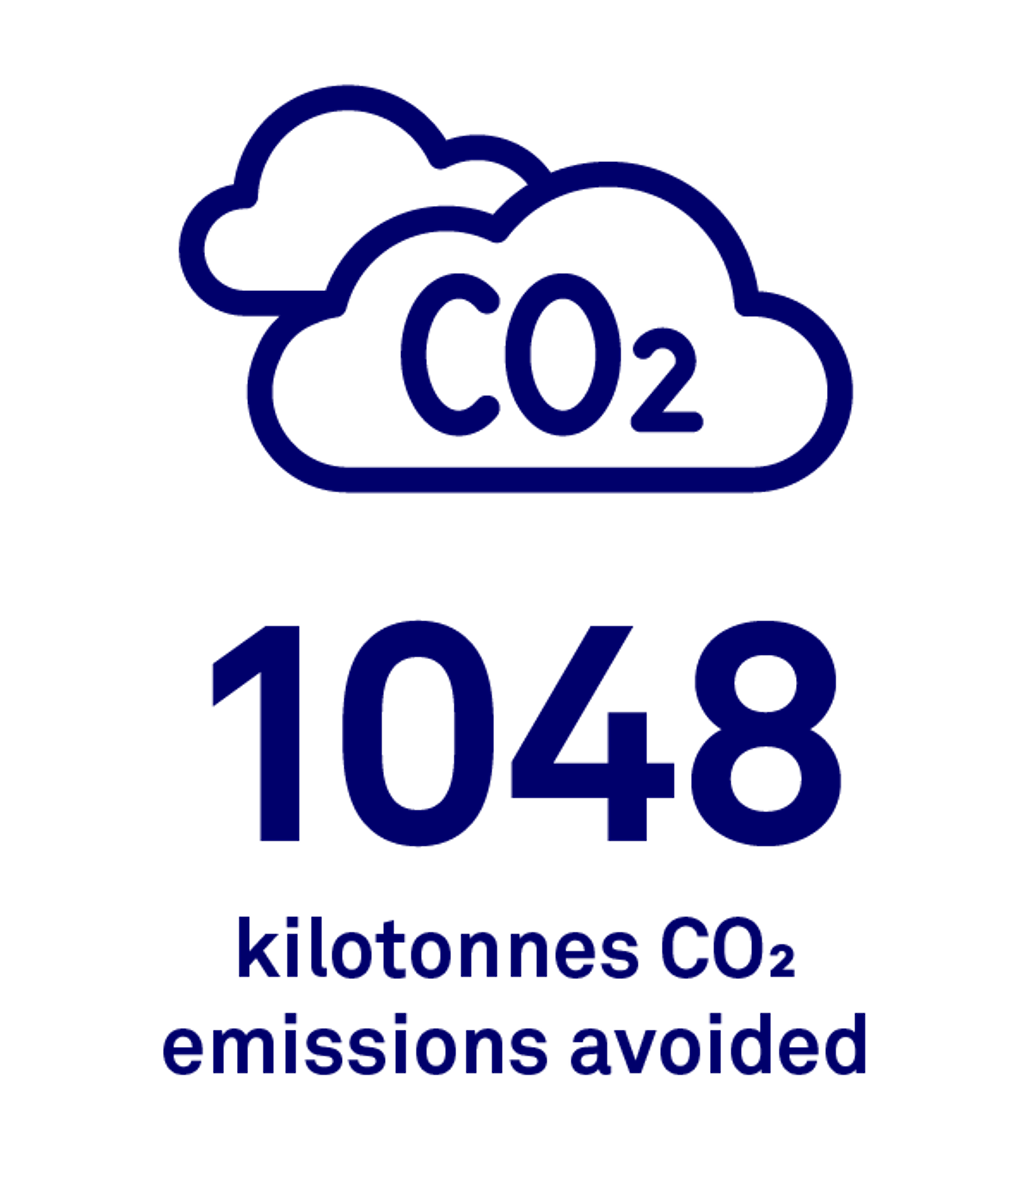 1048 kilotonnes CO2 emissions avoided